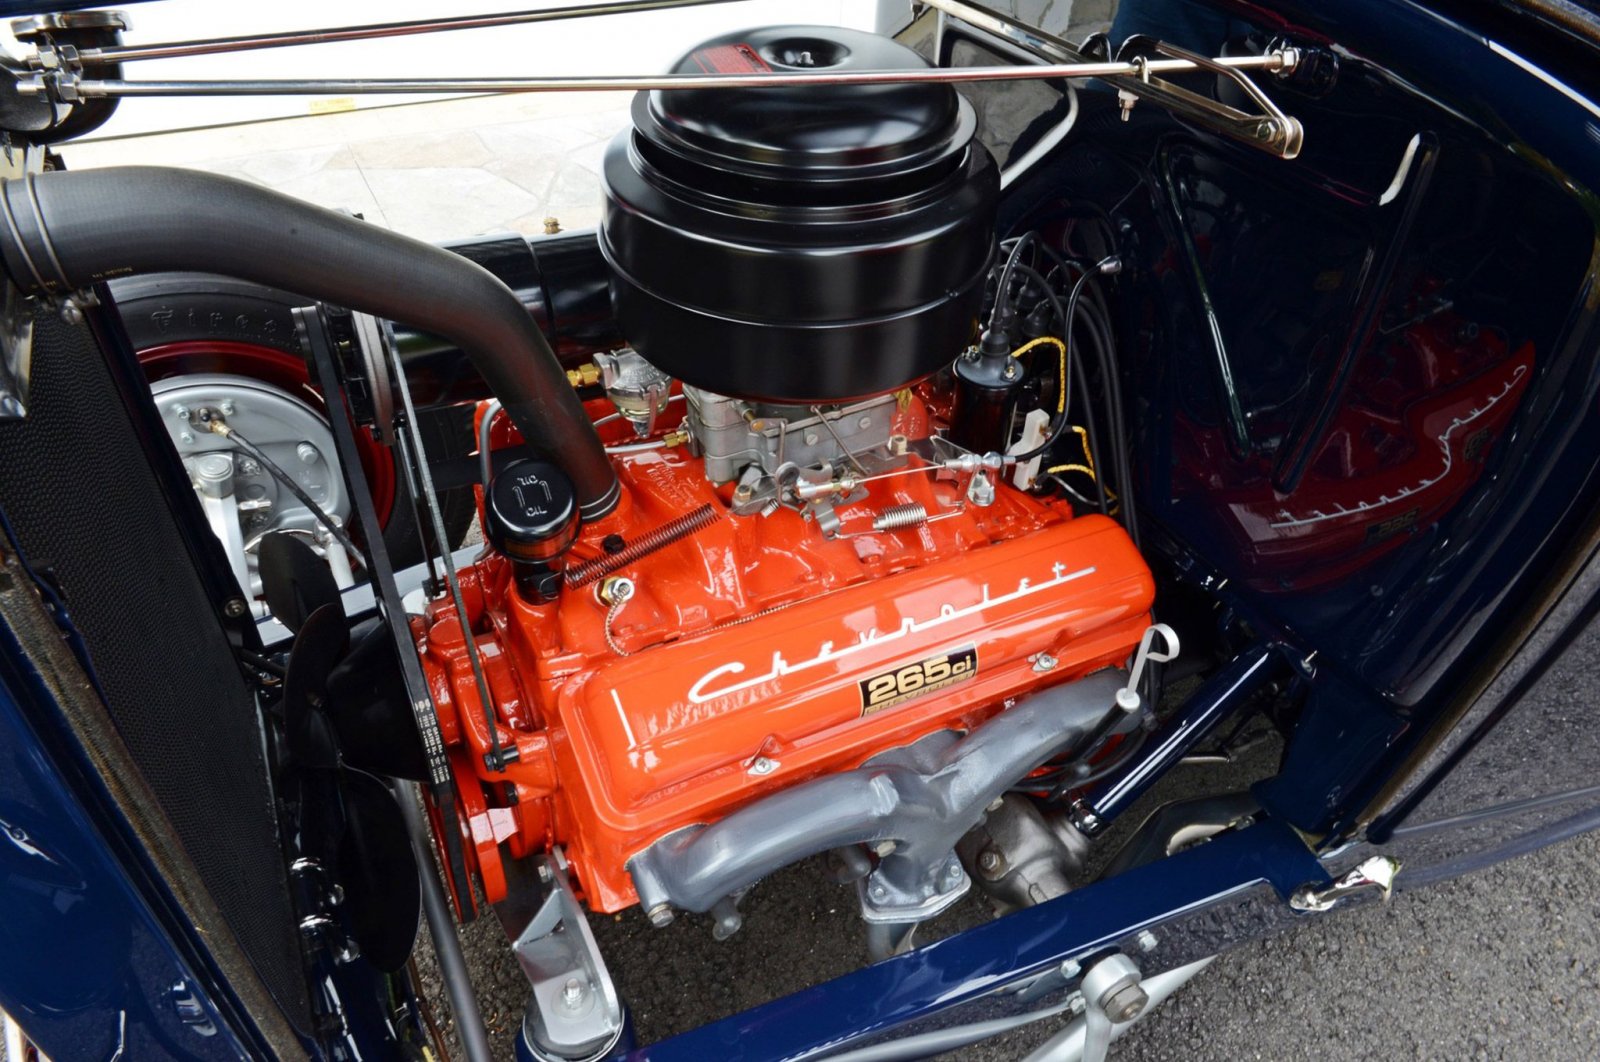 004-cramer-1931-ford-model-a-engine.jpg